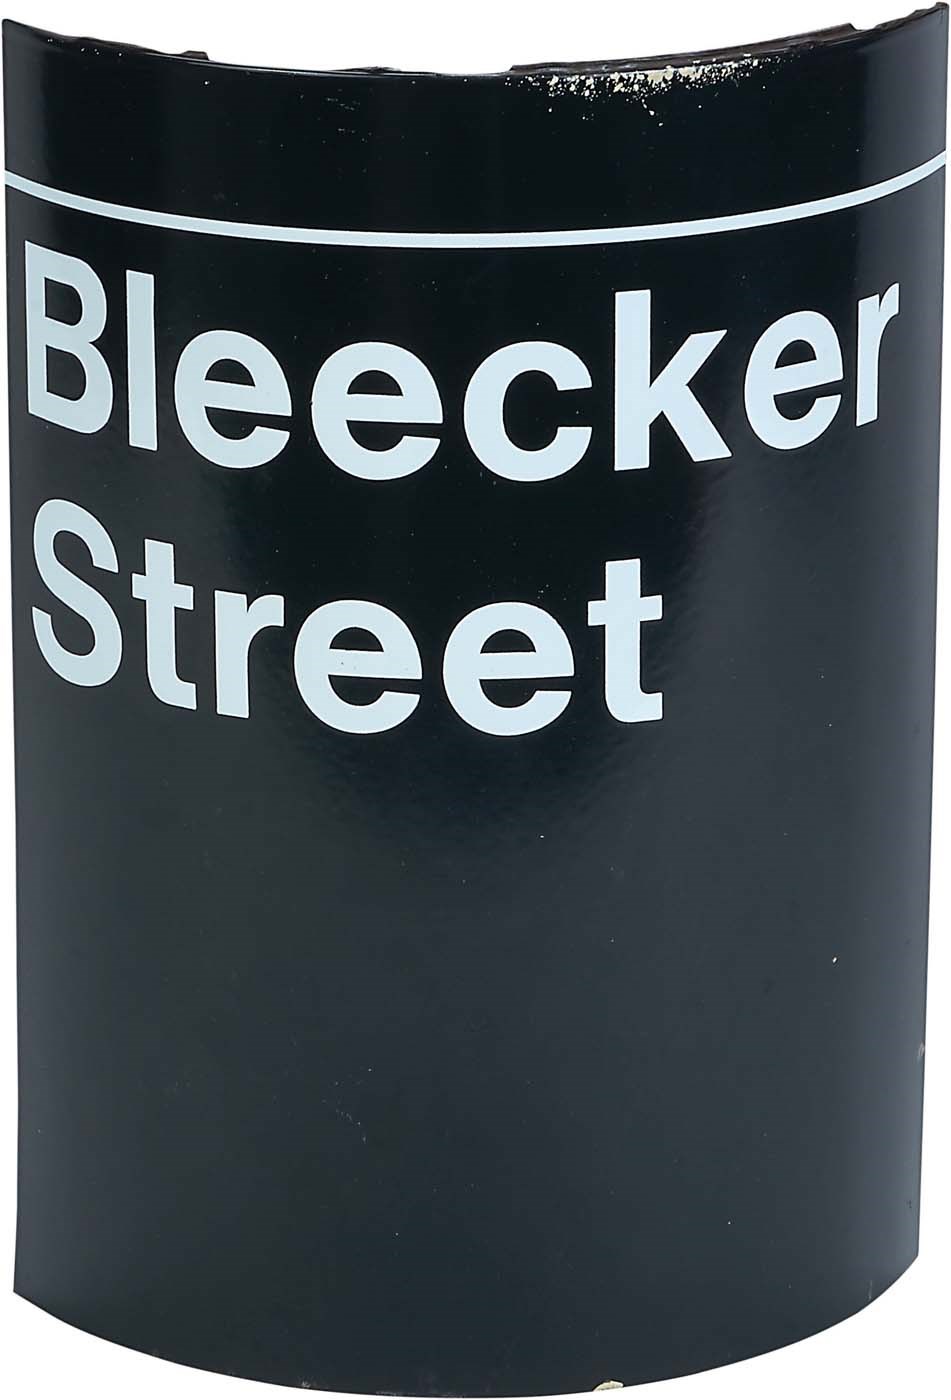 - "Bleeker Street" Black Porcelain New York City Subway Sign